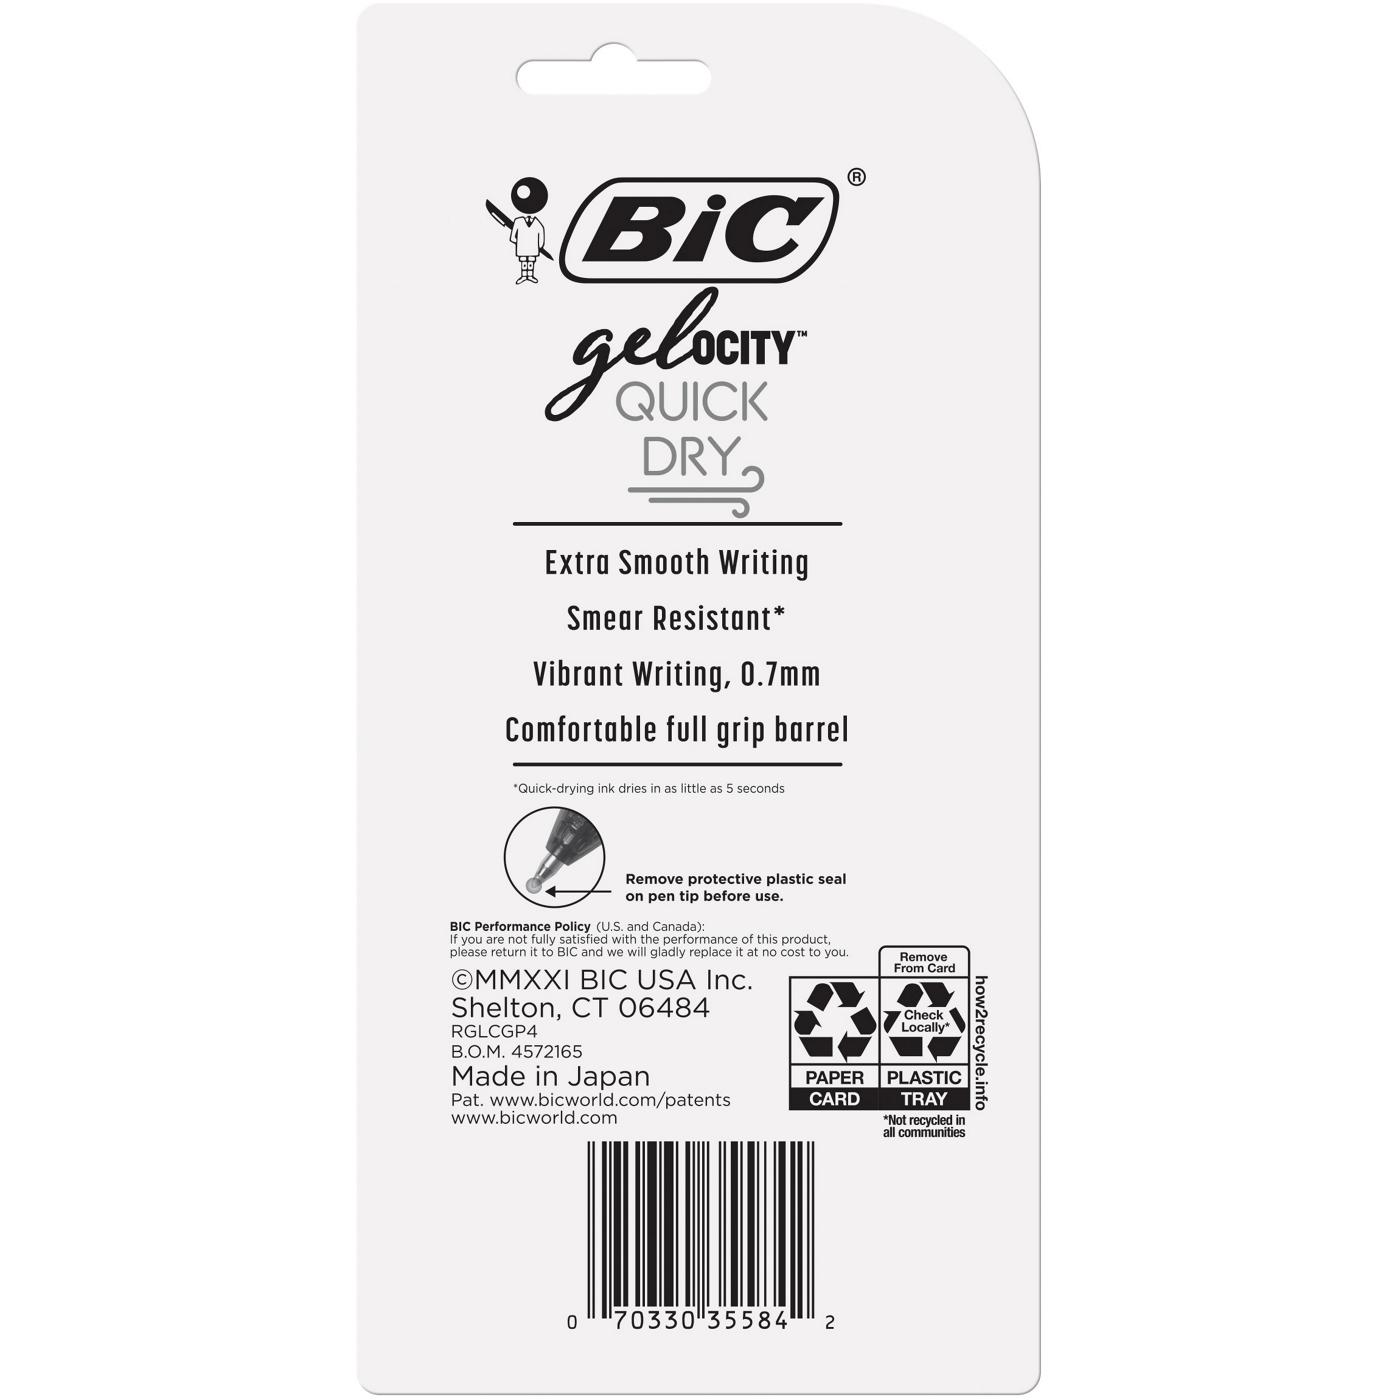 BIC Gel-ocity Quick Dry 0.7mm Gel Pens - Assorted Ink; image 2 of 2